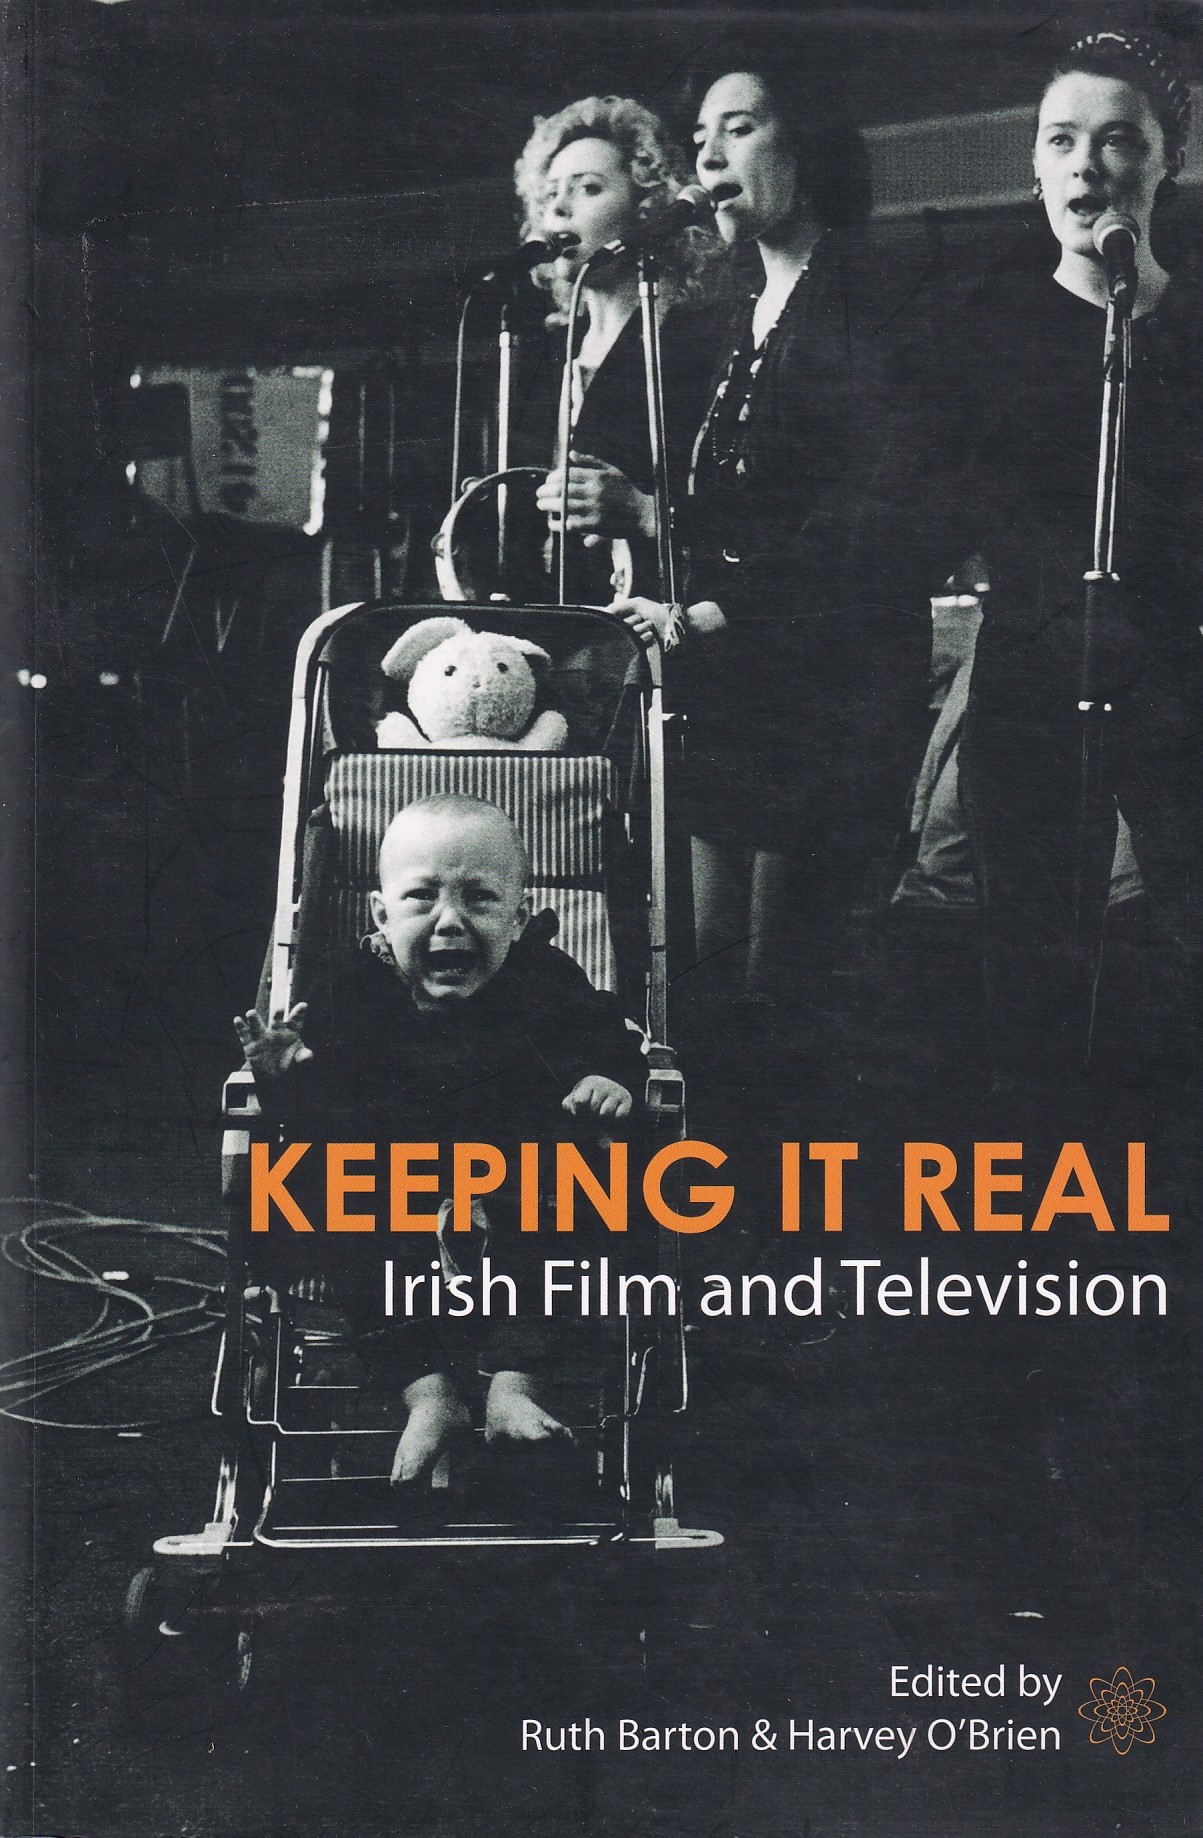 Keeping It Real: Irish Film & Television by Ruth Barton & Harvey O'Brien (eds.)